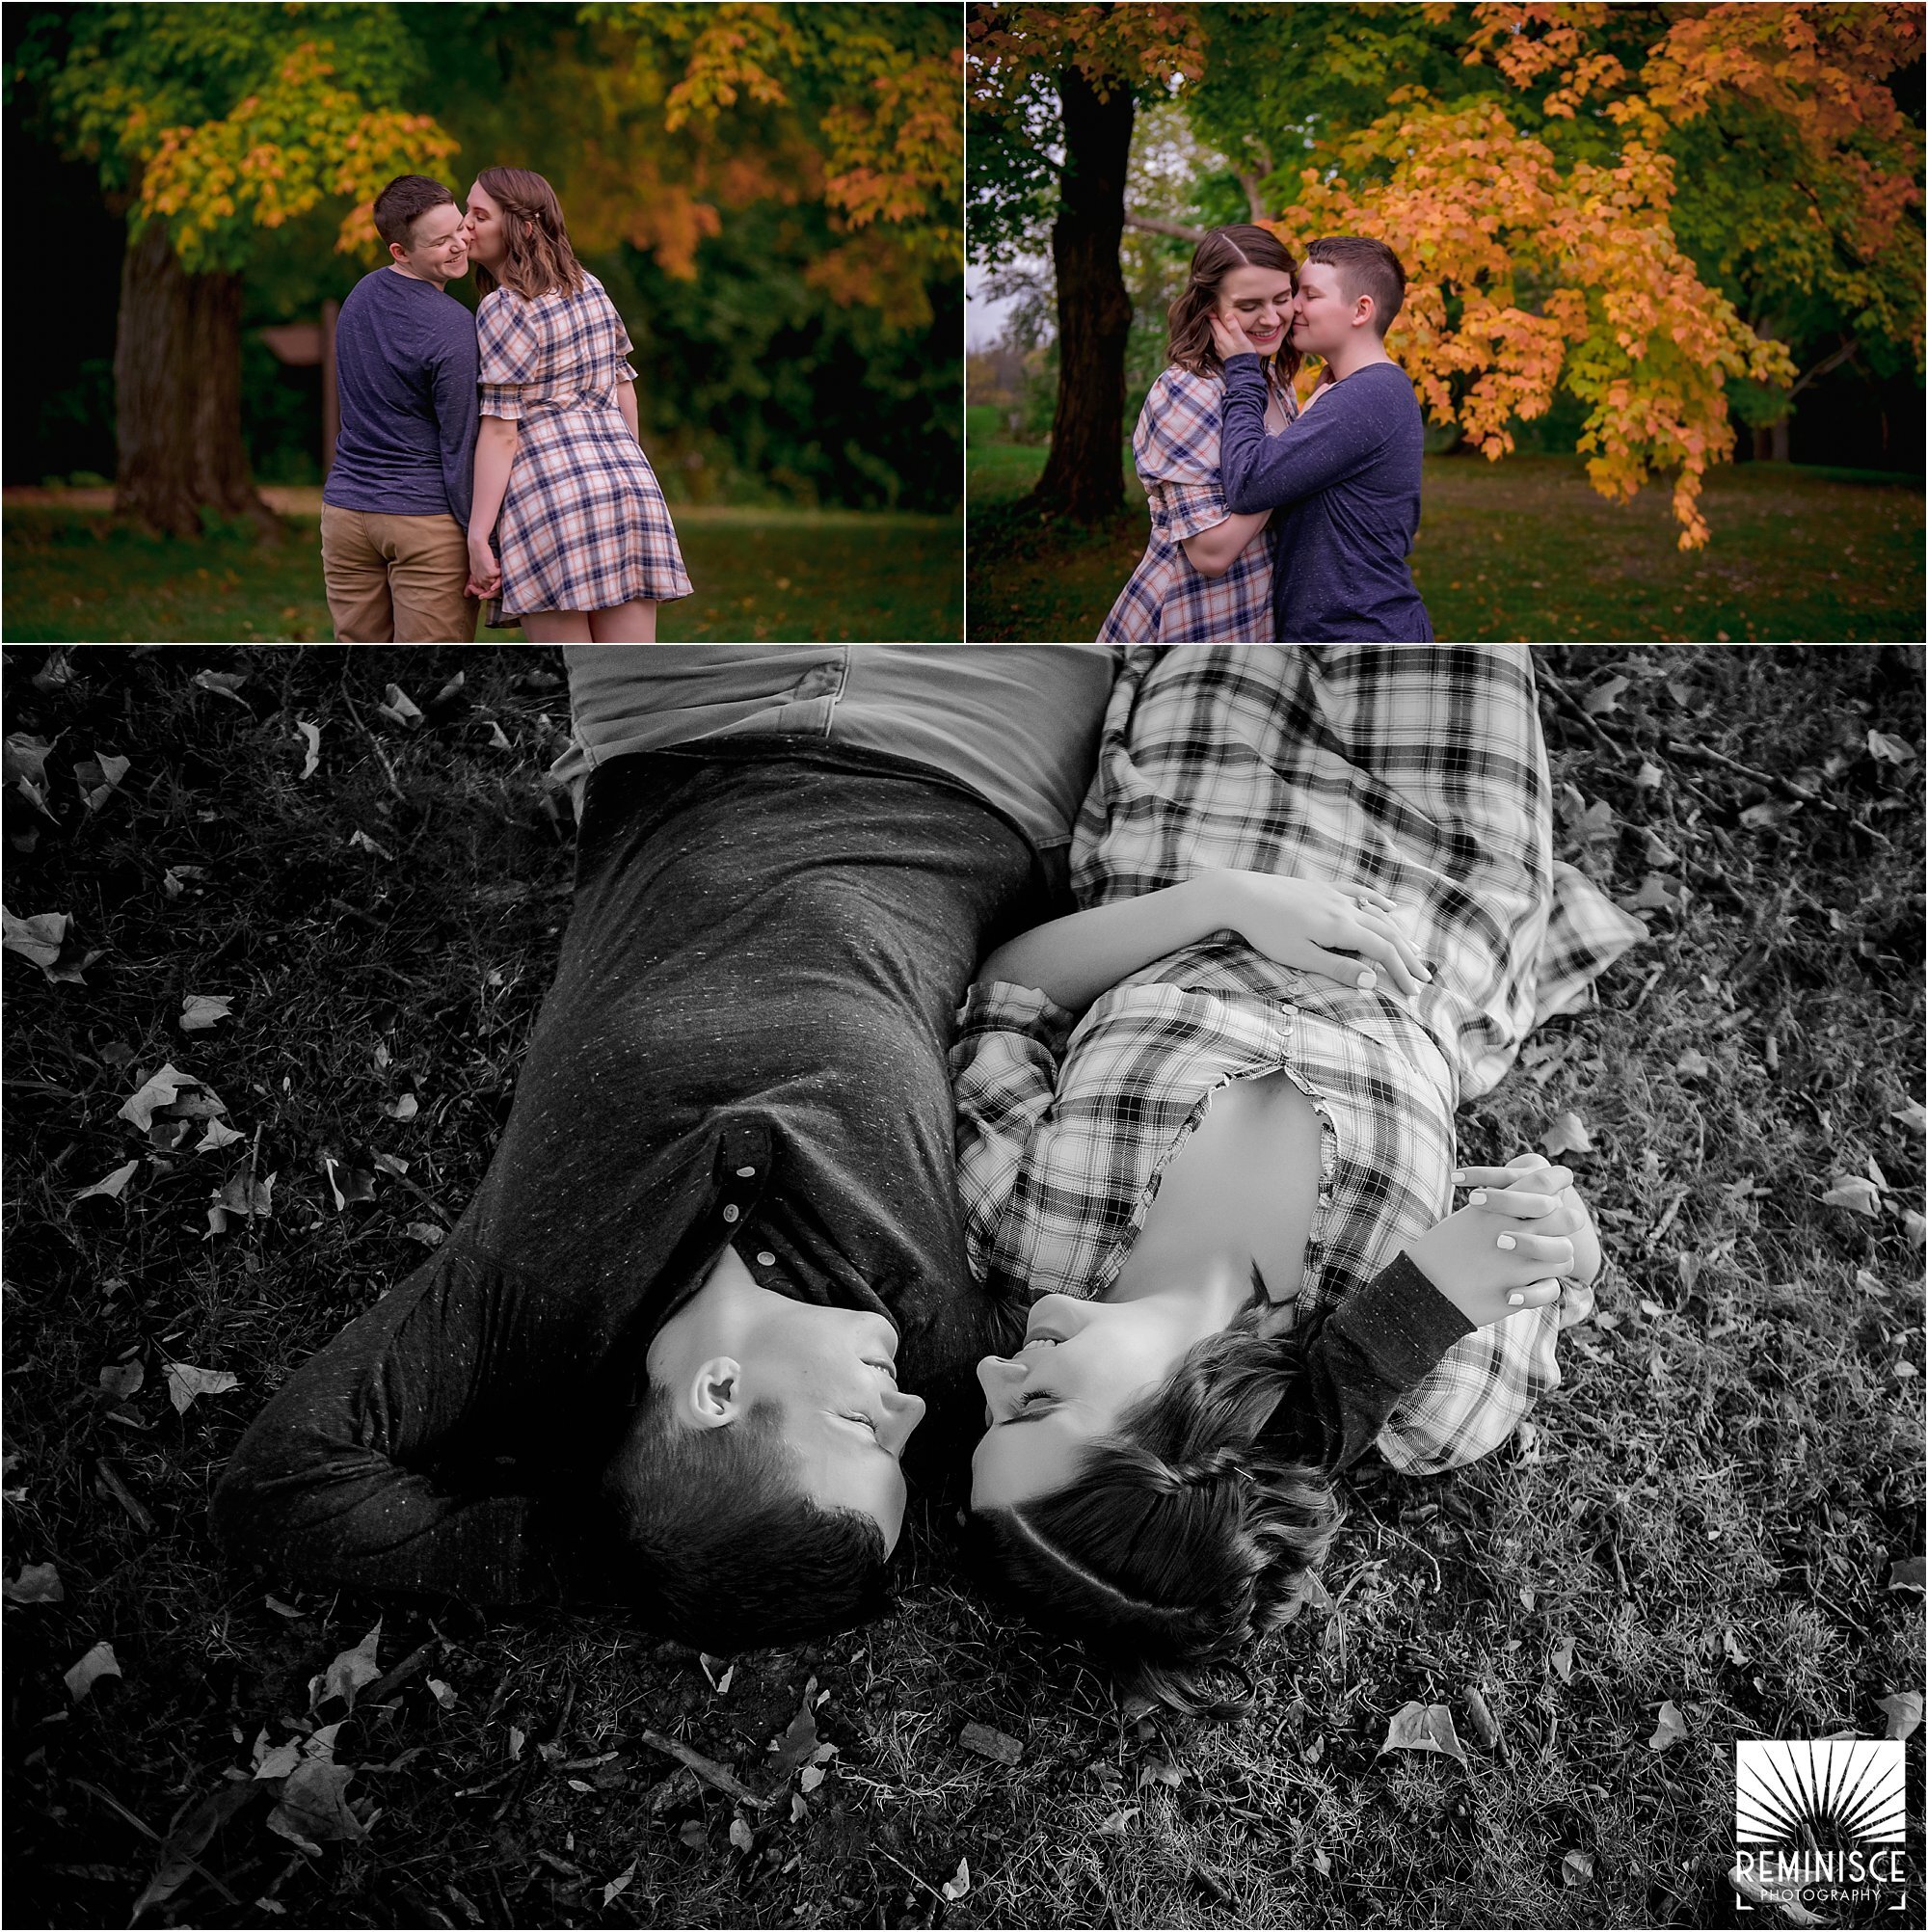 69-same-sex-engagement-photos-brown-deer-park-milwaukee-lgbtq-friendly-laying-on-backs-fall-leaves.jpg